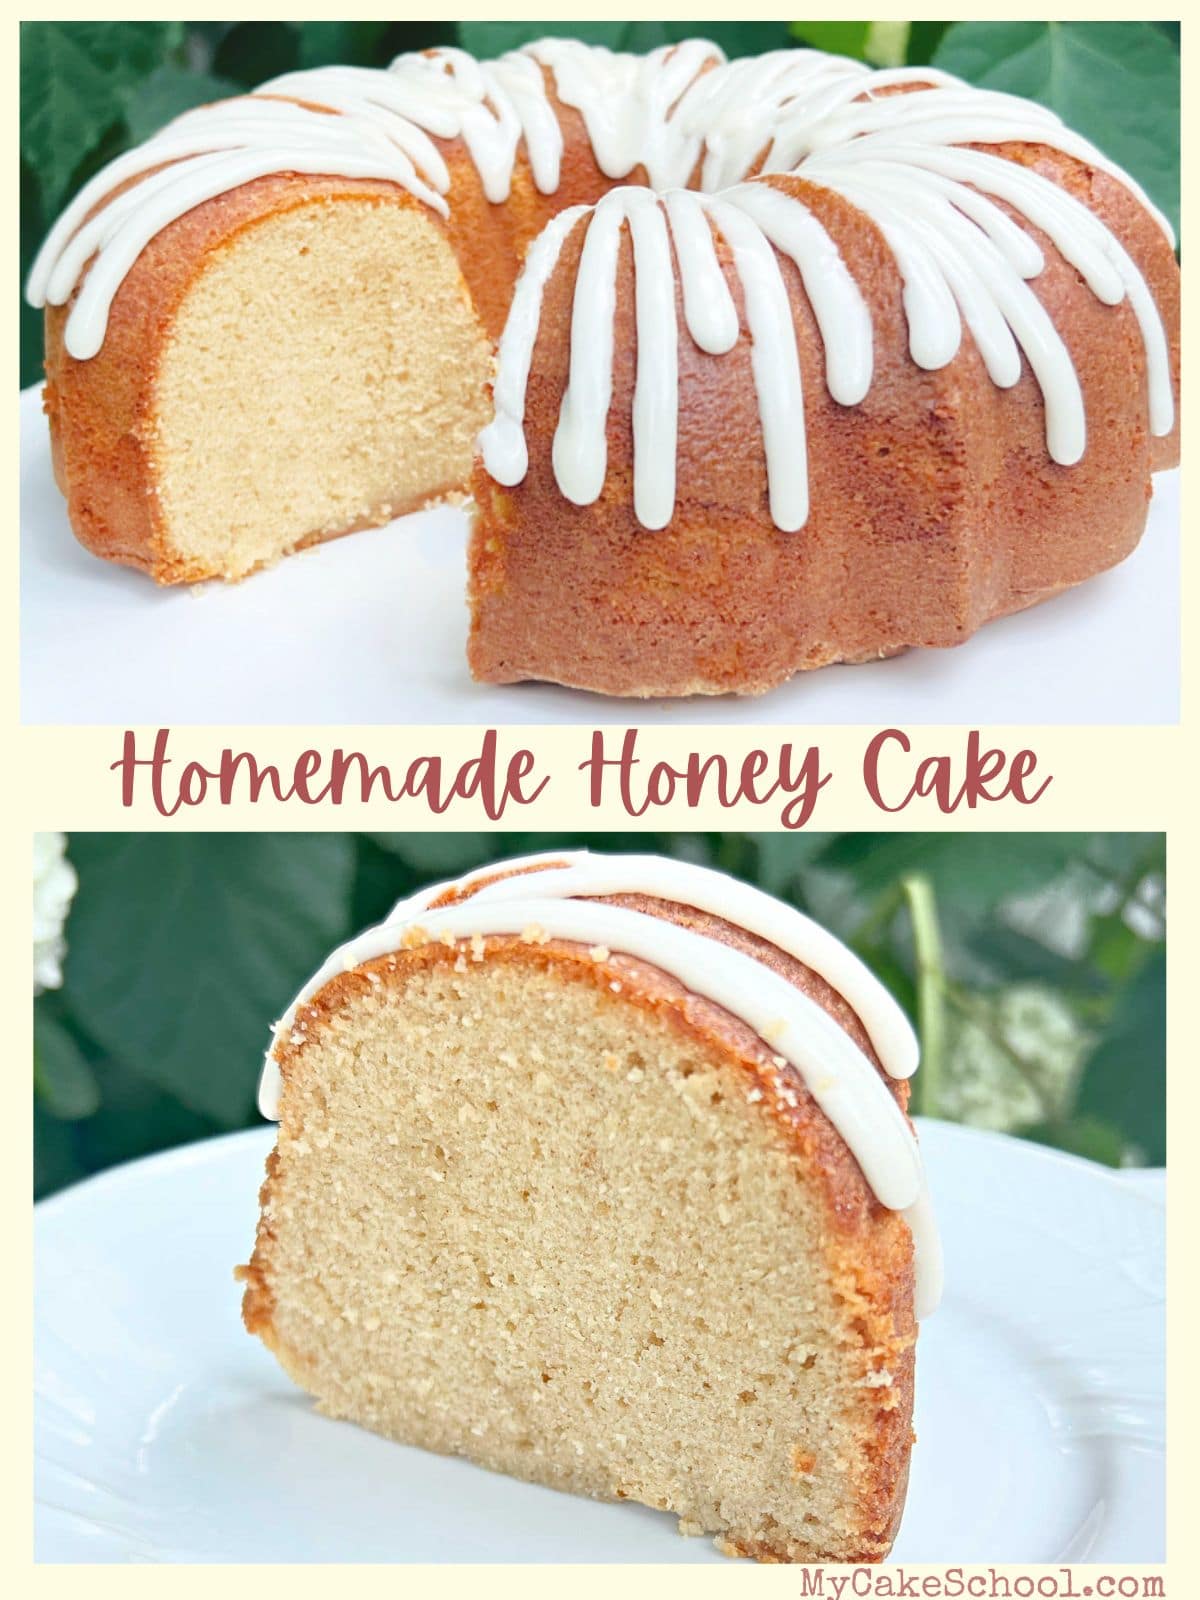 Photos of honey cake and slice of cake, topped with a honey glaze